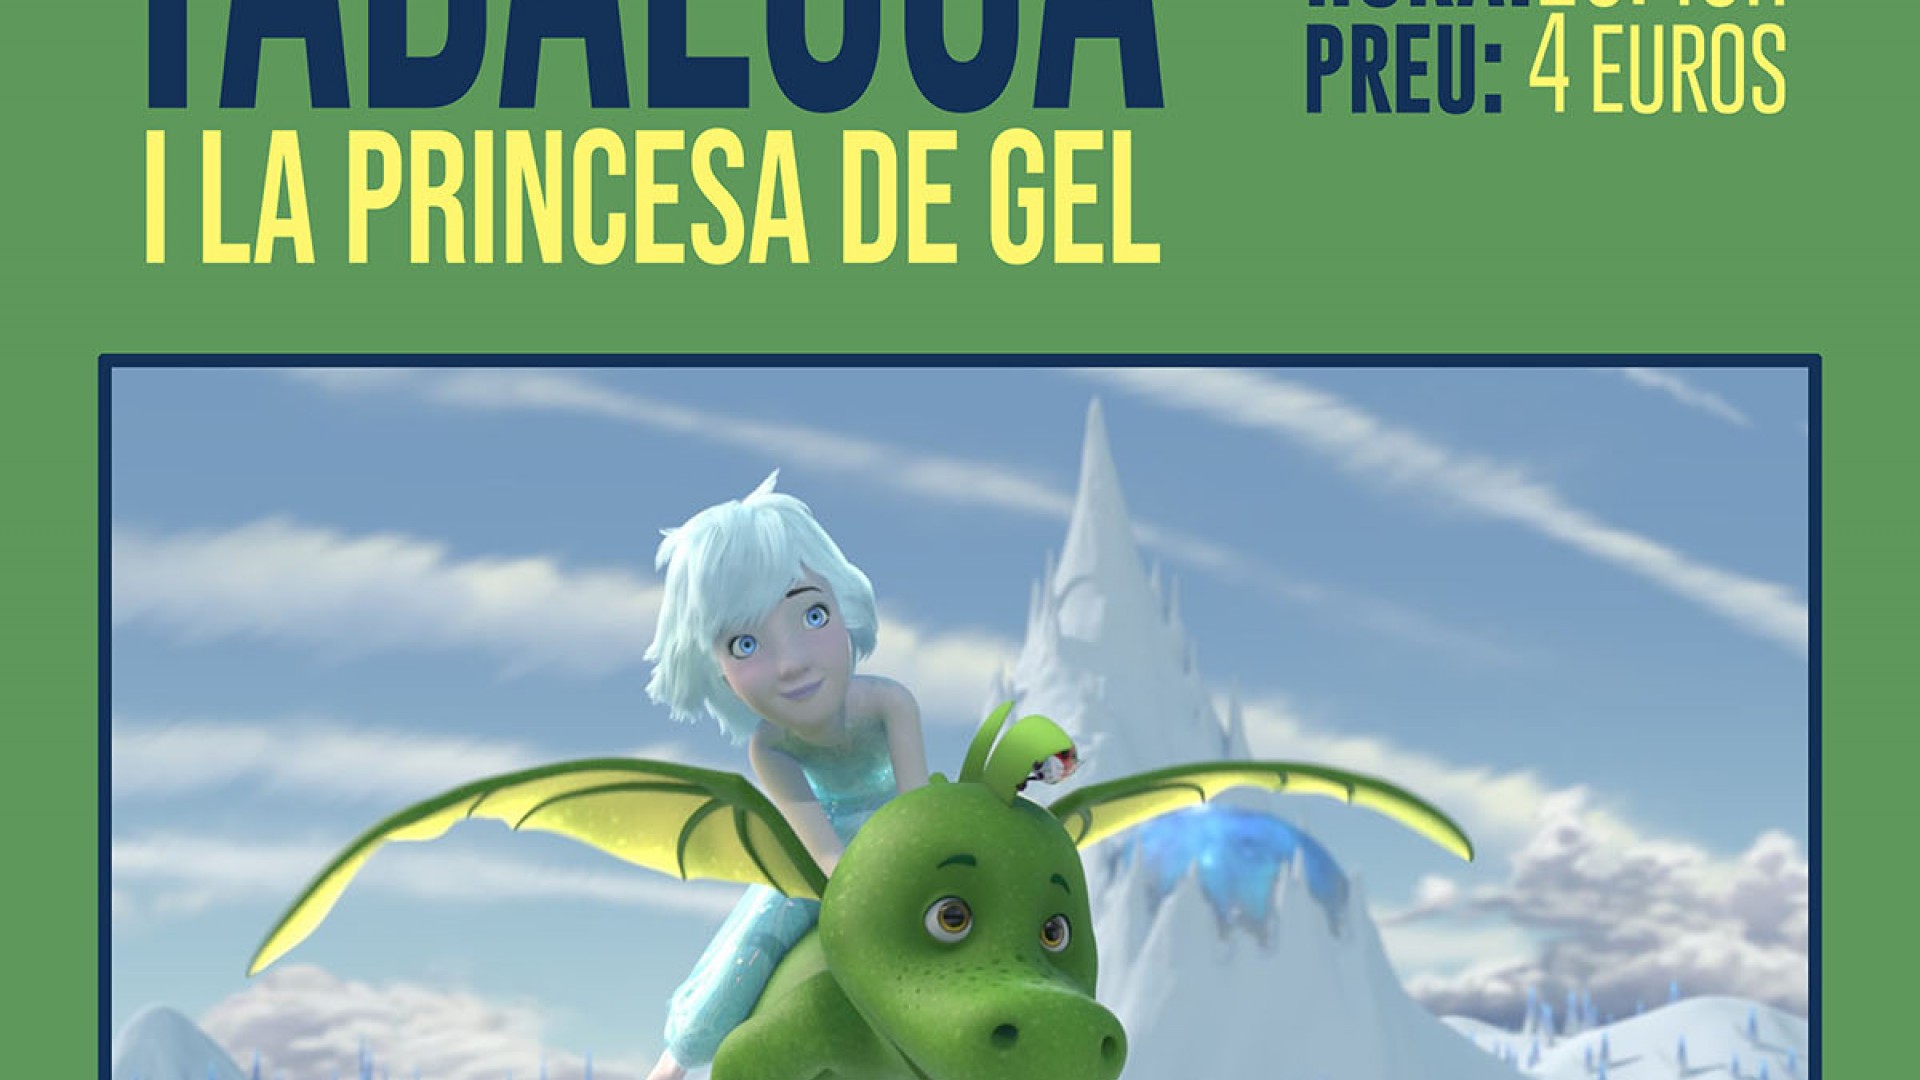 Vuelve CineCiutat Nins: Tabaluga i la princesa de gel